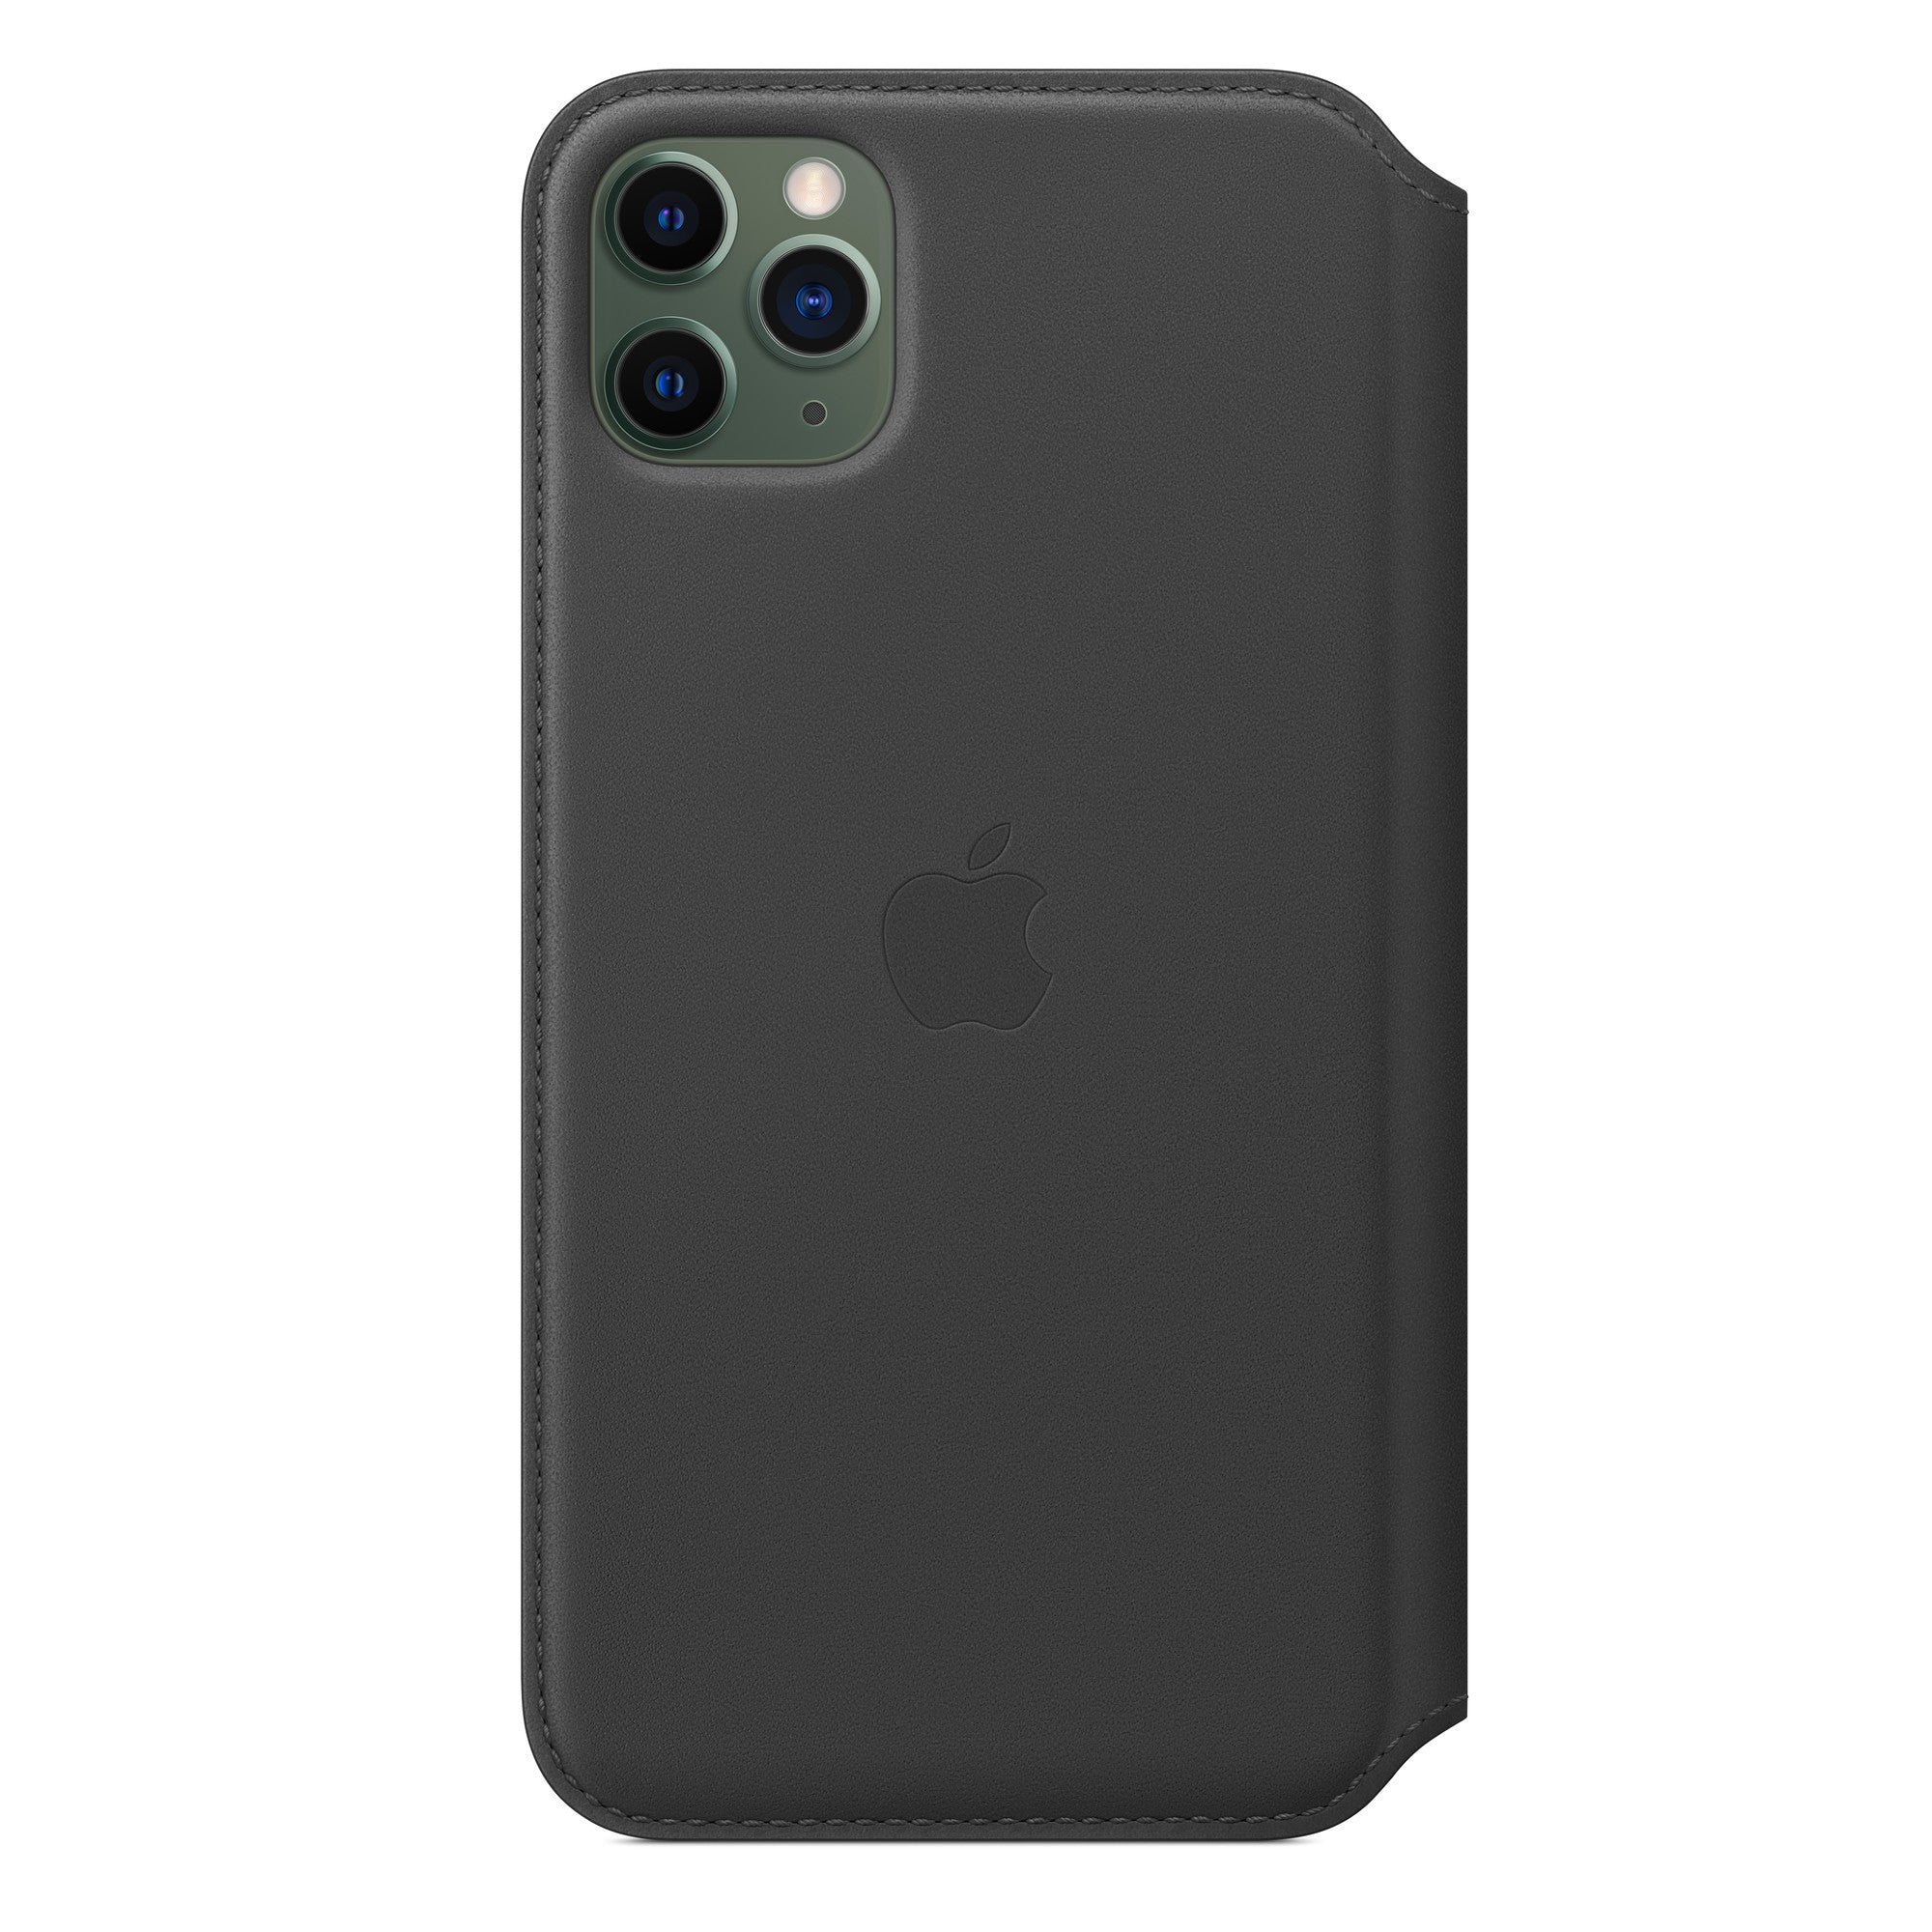 Apple iPhone 11 Pro Max 64GB Nachtgrün Fair Ohne Vertrag mit Apple iPhone 11 Pro Max Leder Folio - Schwarz